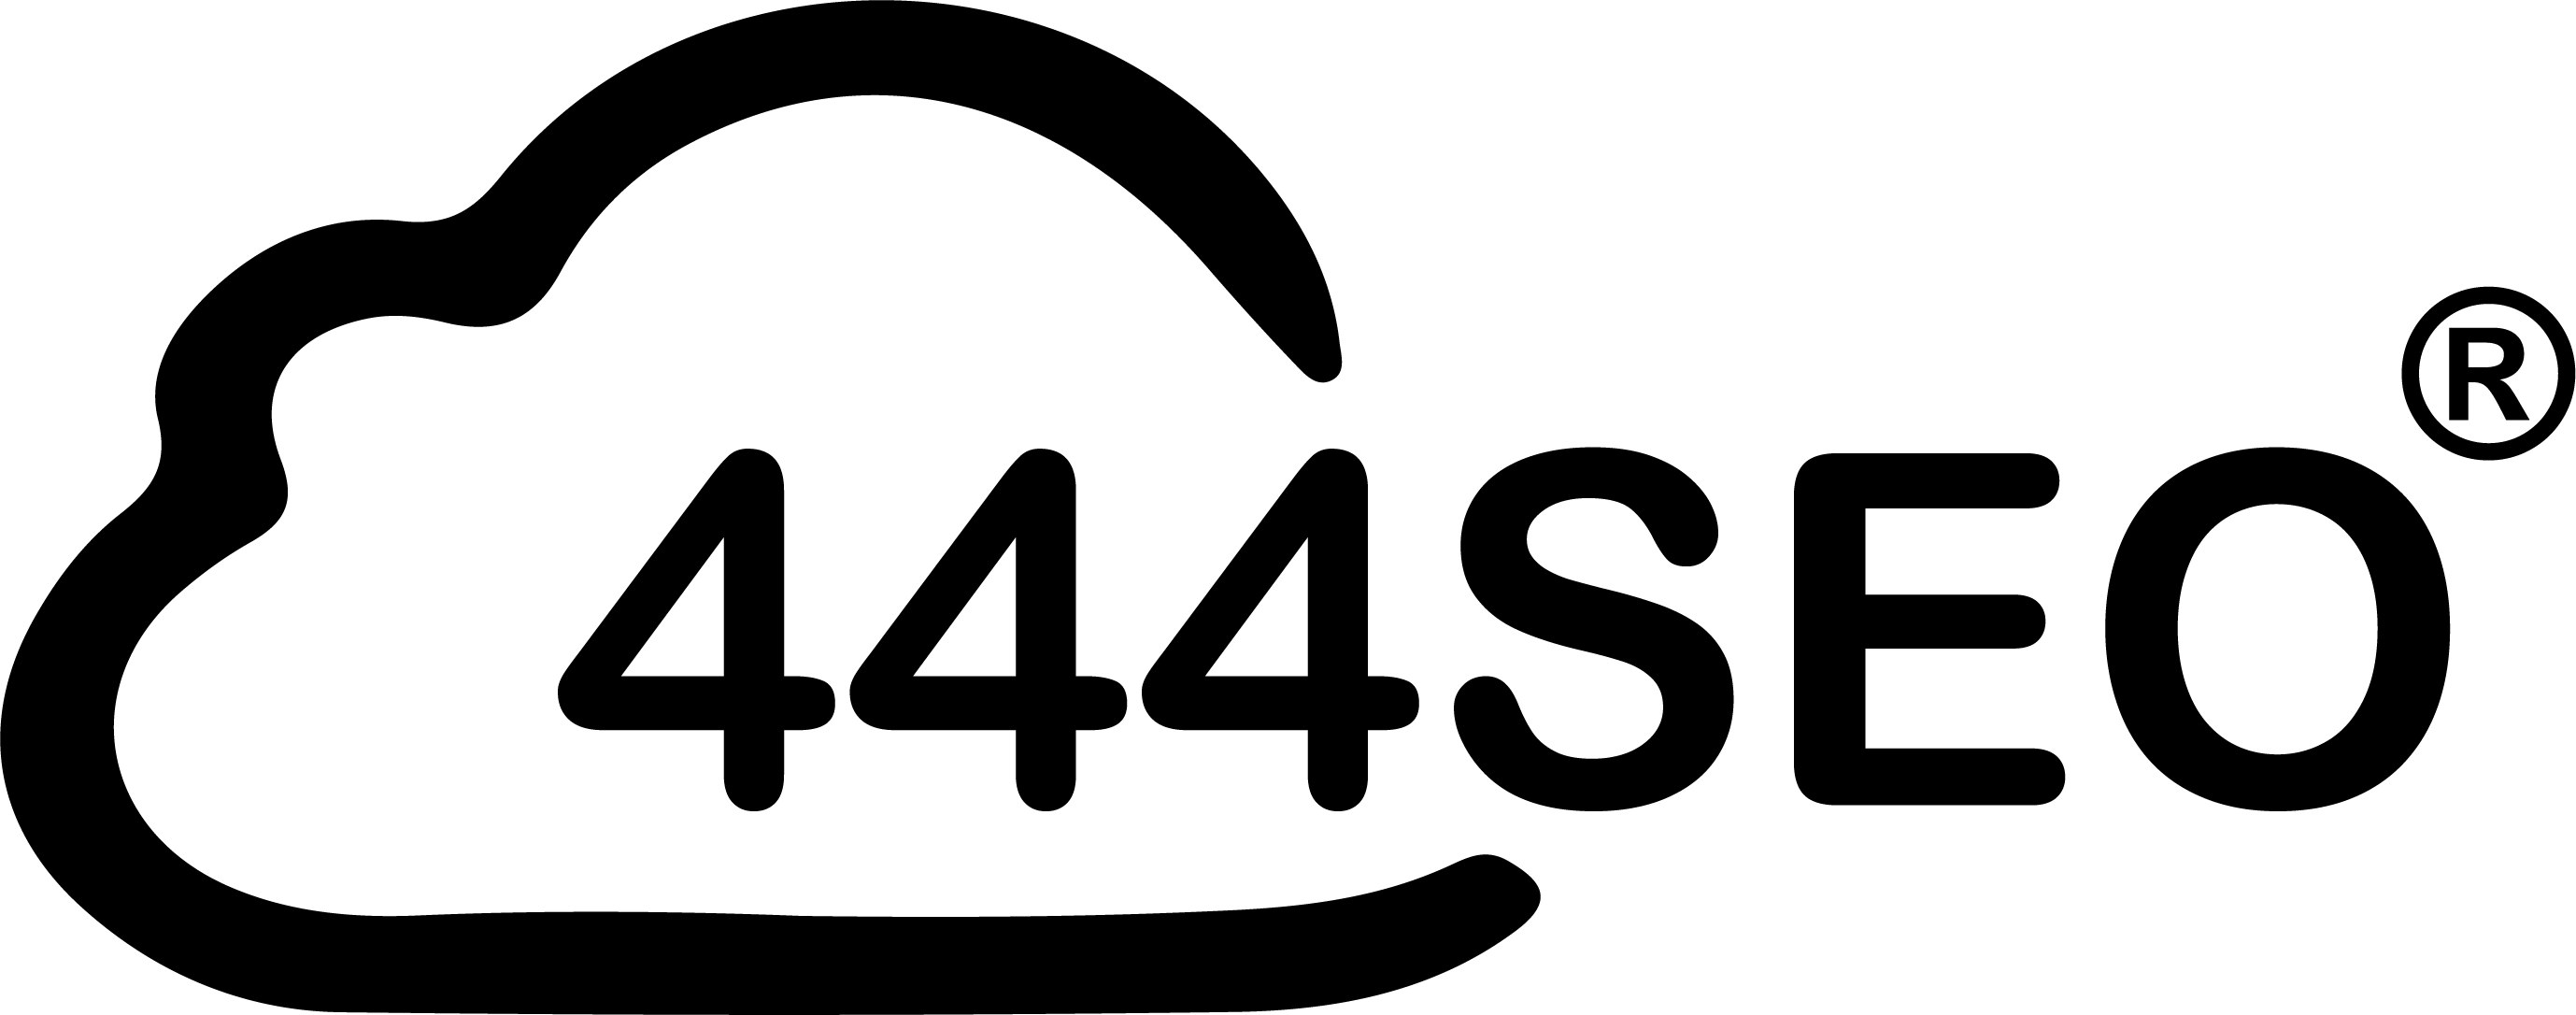 444SEO logo